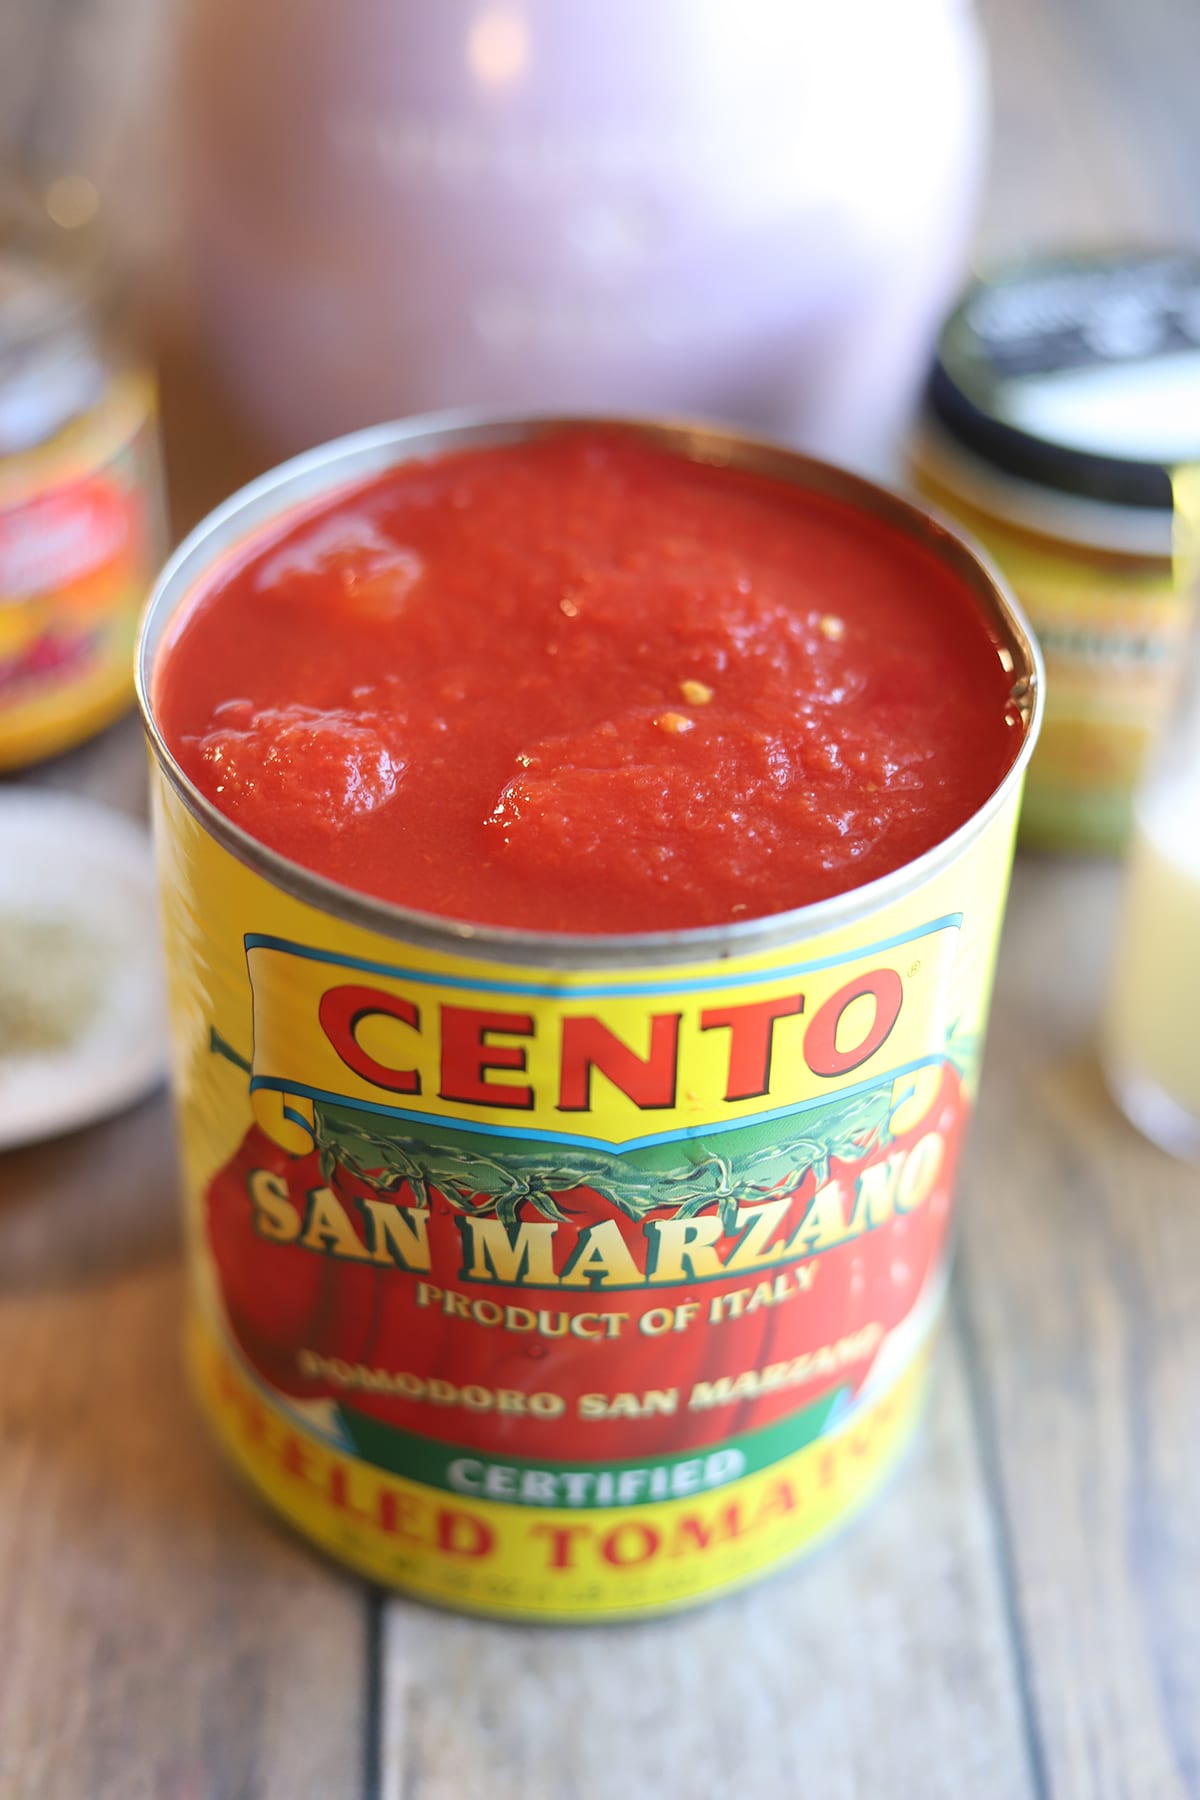 Can of Cento San Marzano tomatoes.